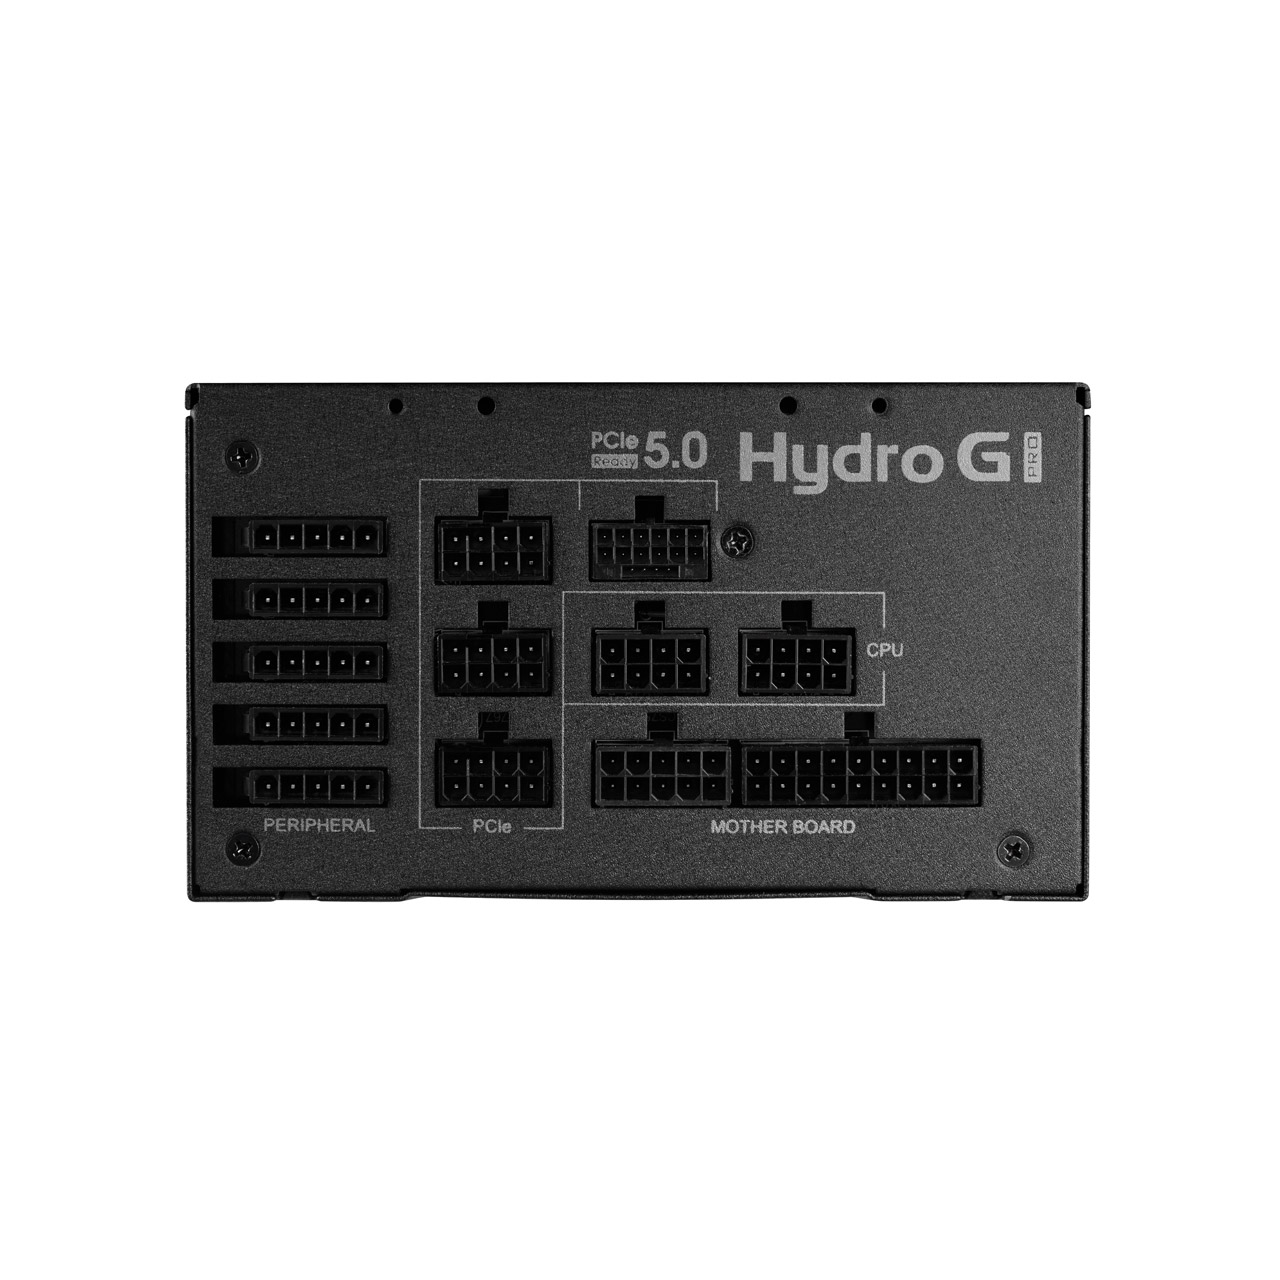 FSP HYDRO G PRO 850/ 850W/ ATX 3.0/ 80PLUS Gold/ Modular/ Retail 